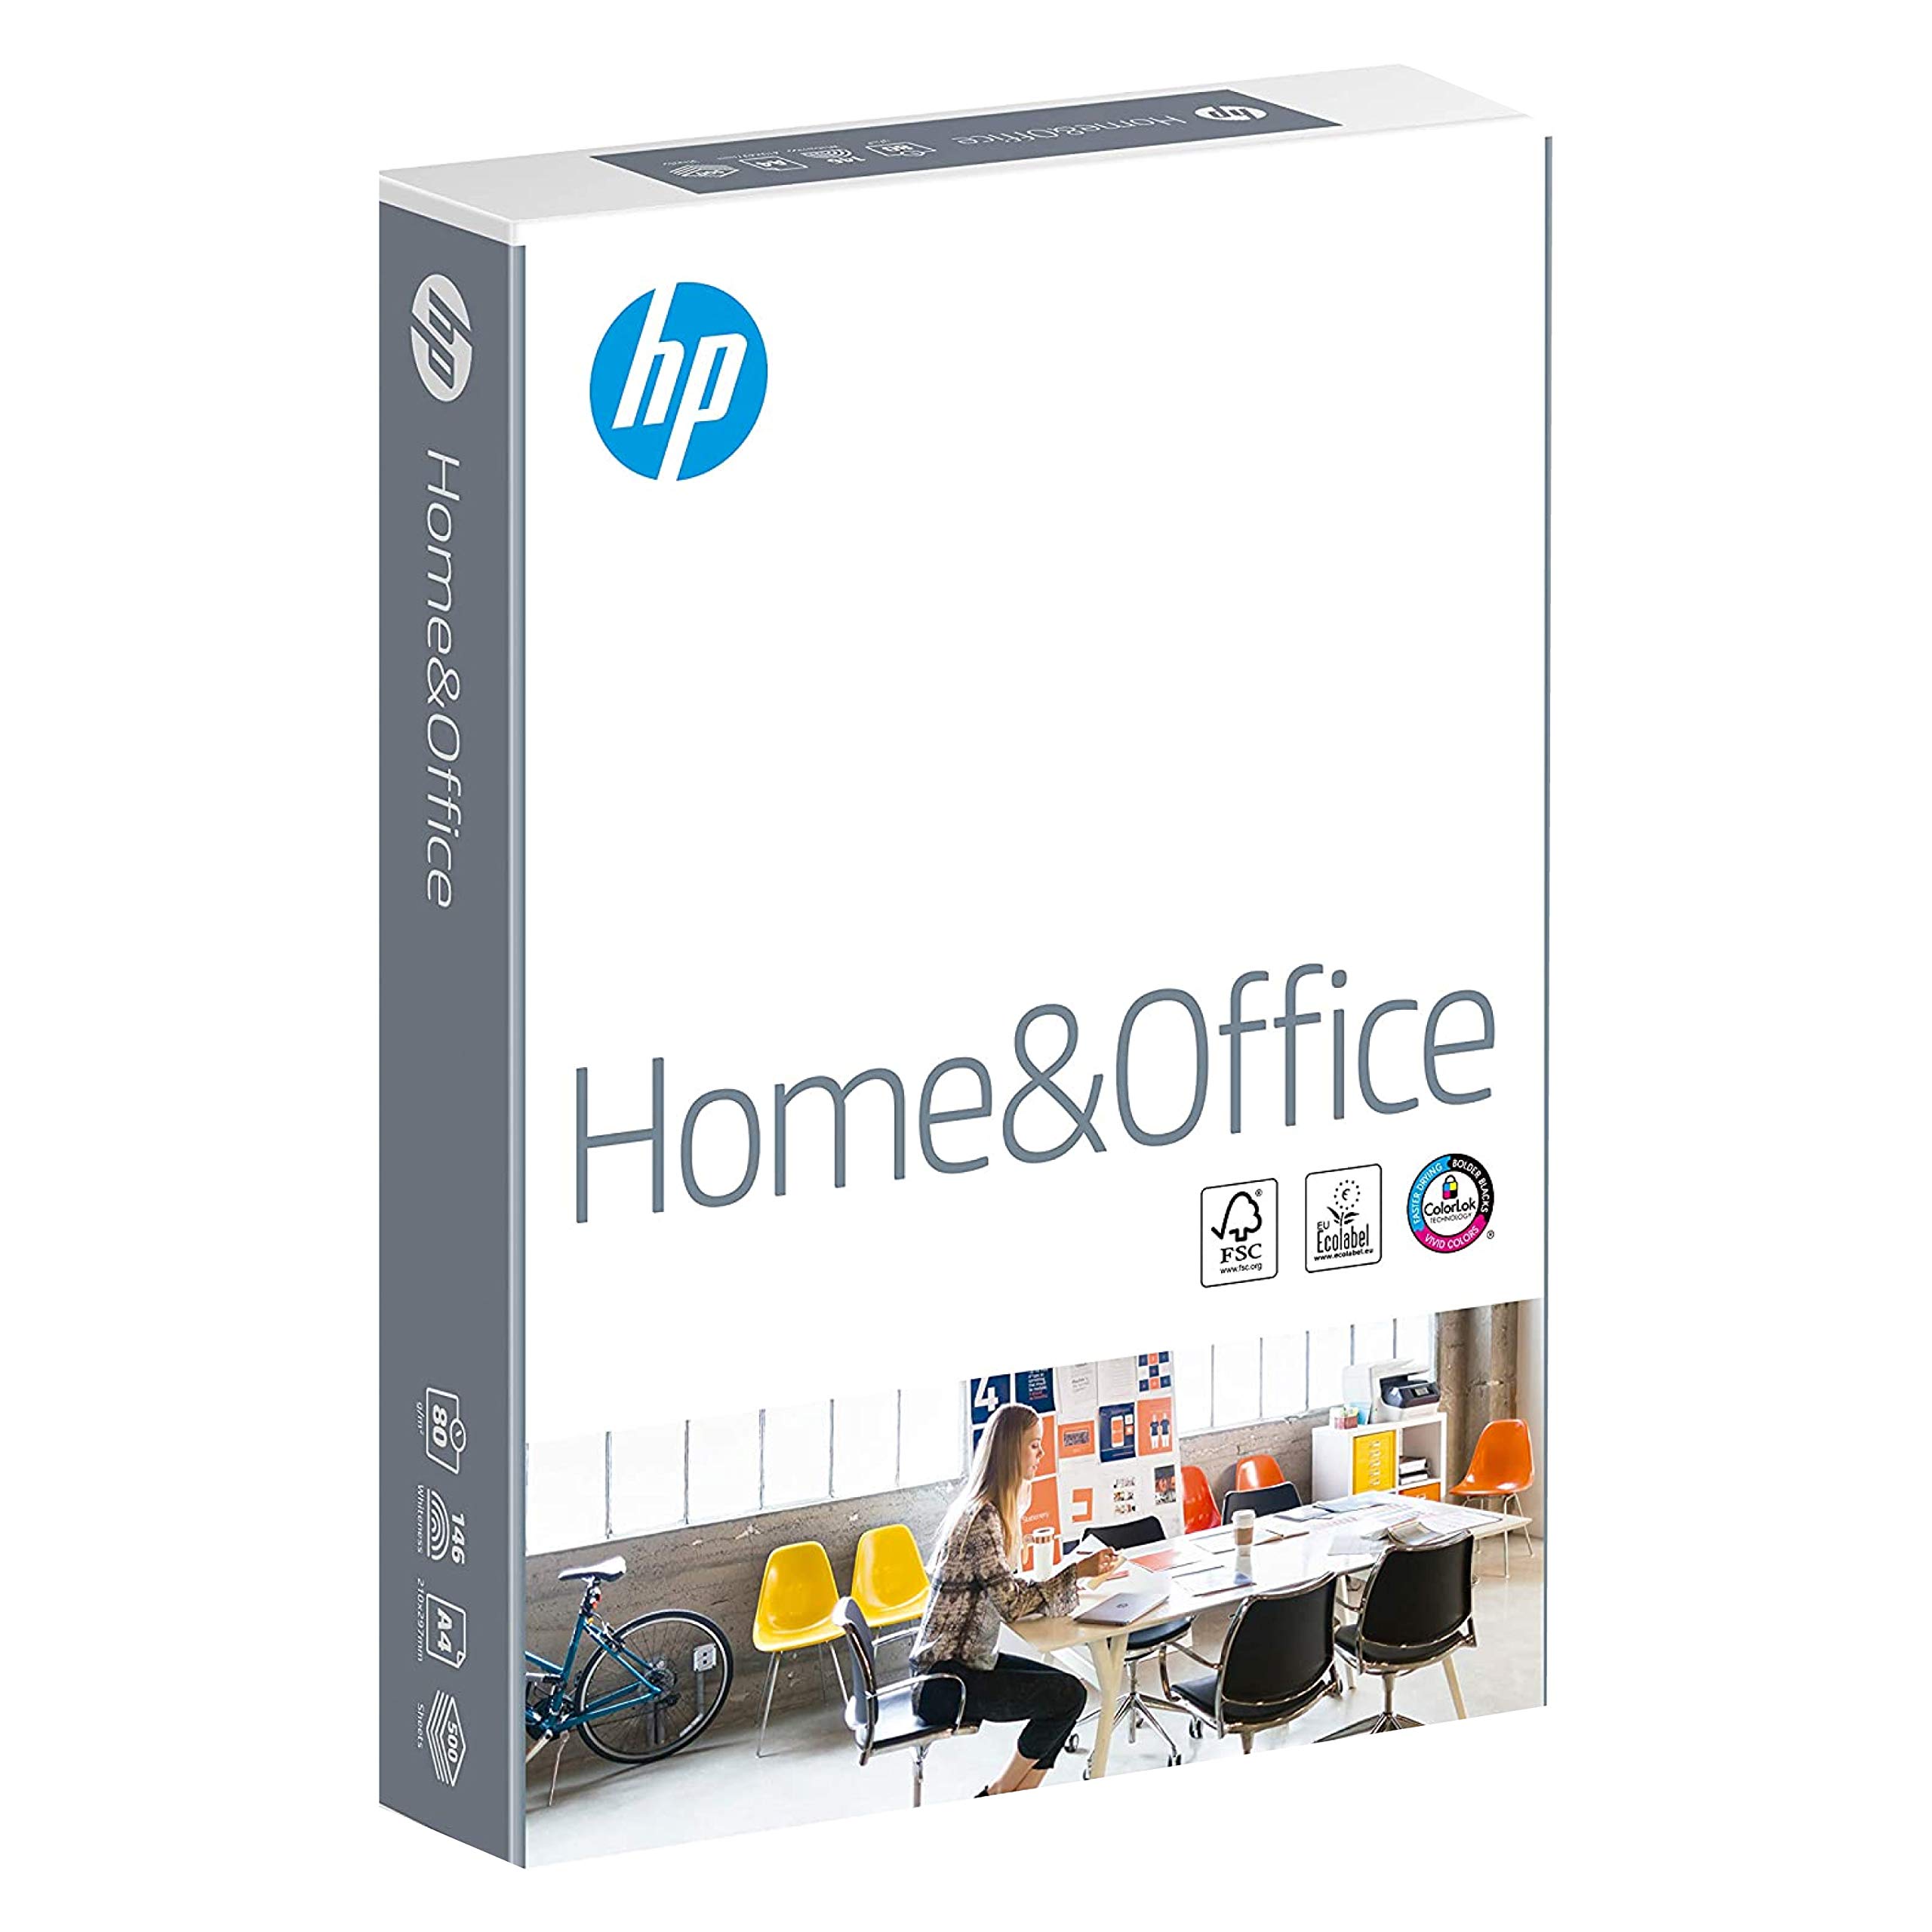 Бумага ксероксная А4 HP Home&Office 80гр., 500л., 2,5 кг, класс С+